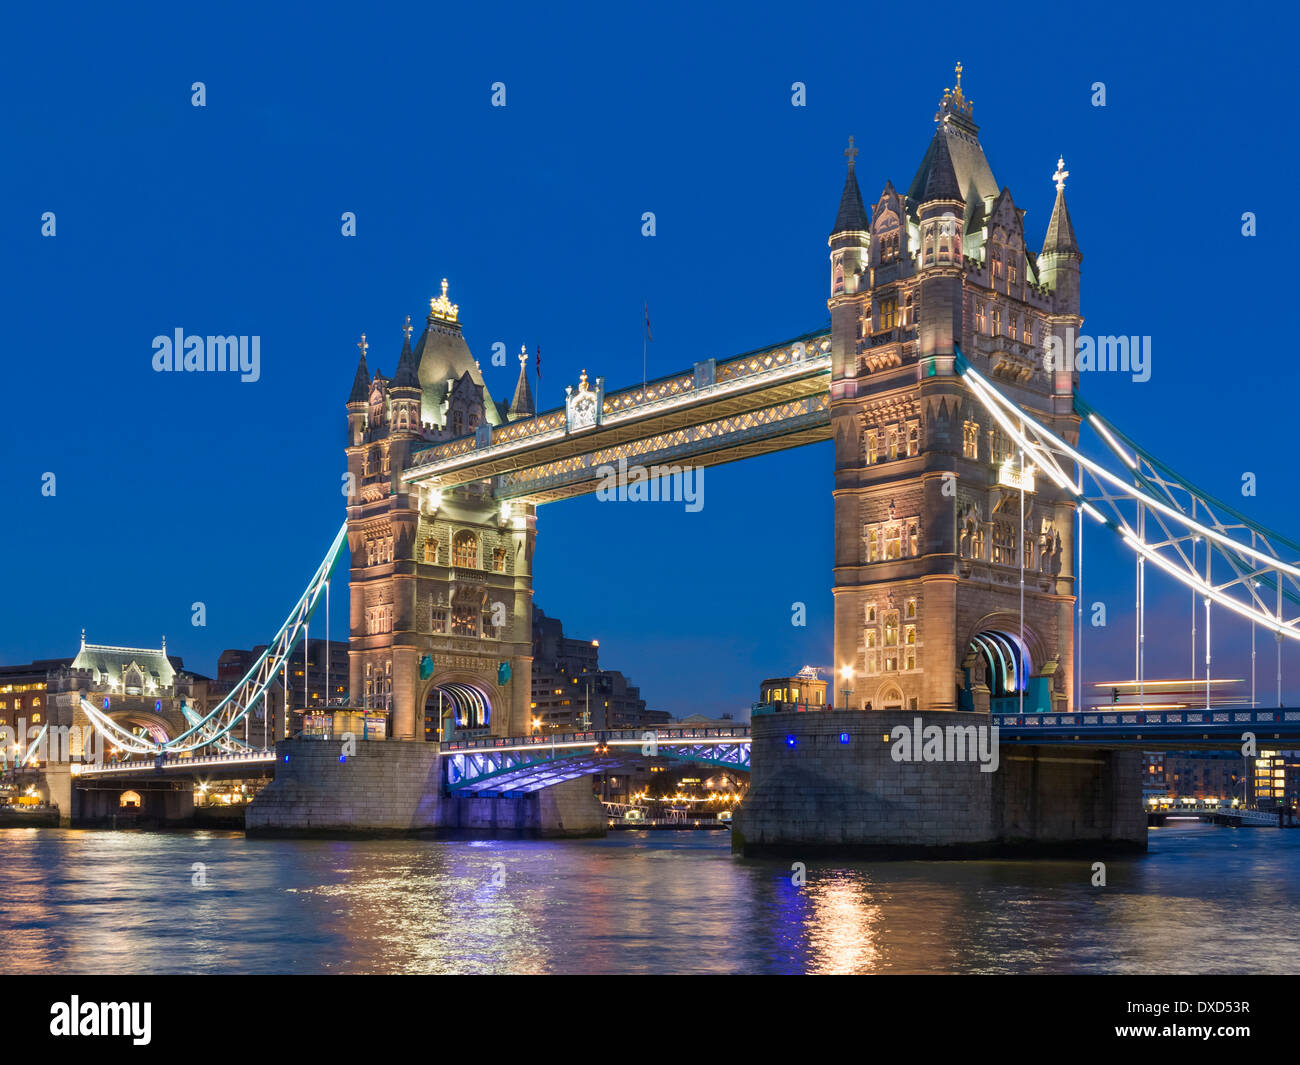 Tower Bridge, London, England, UK at night Banque D'Images